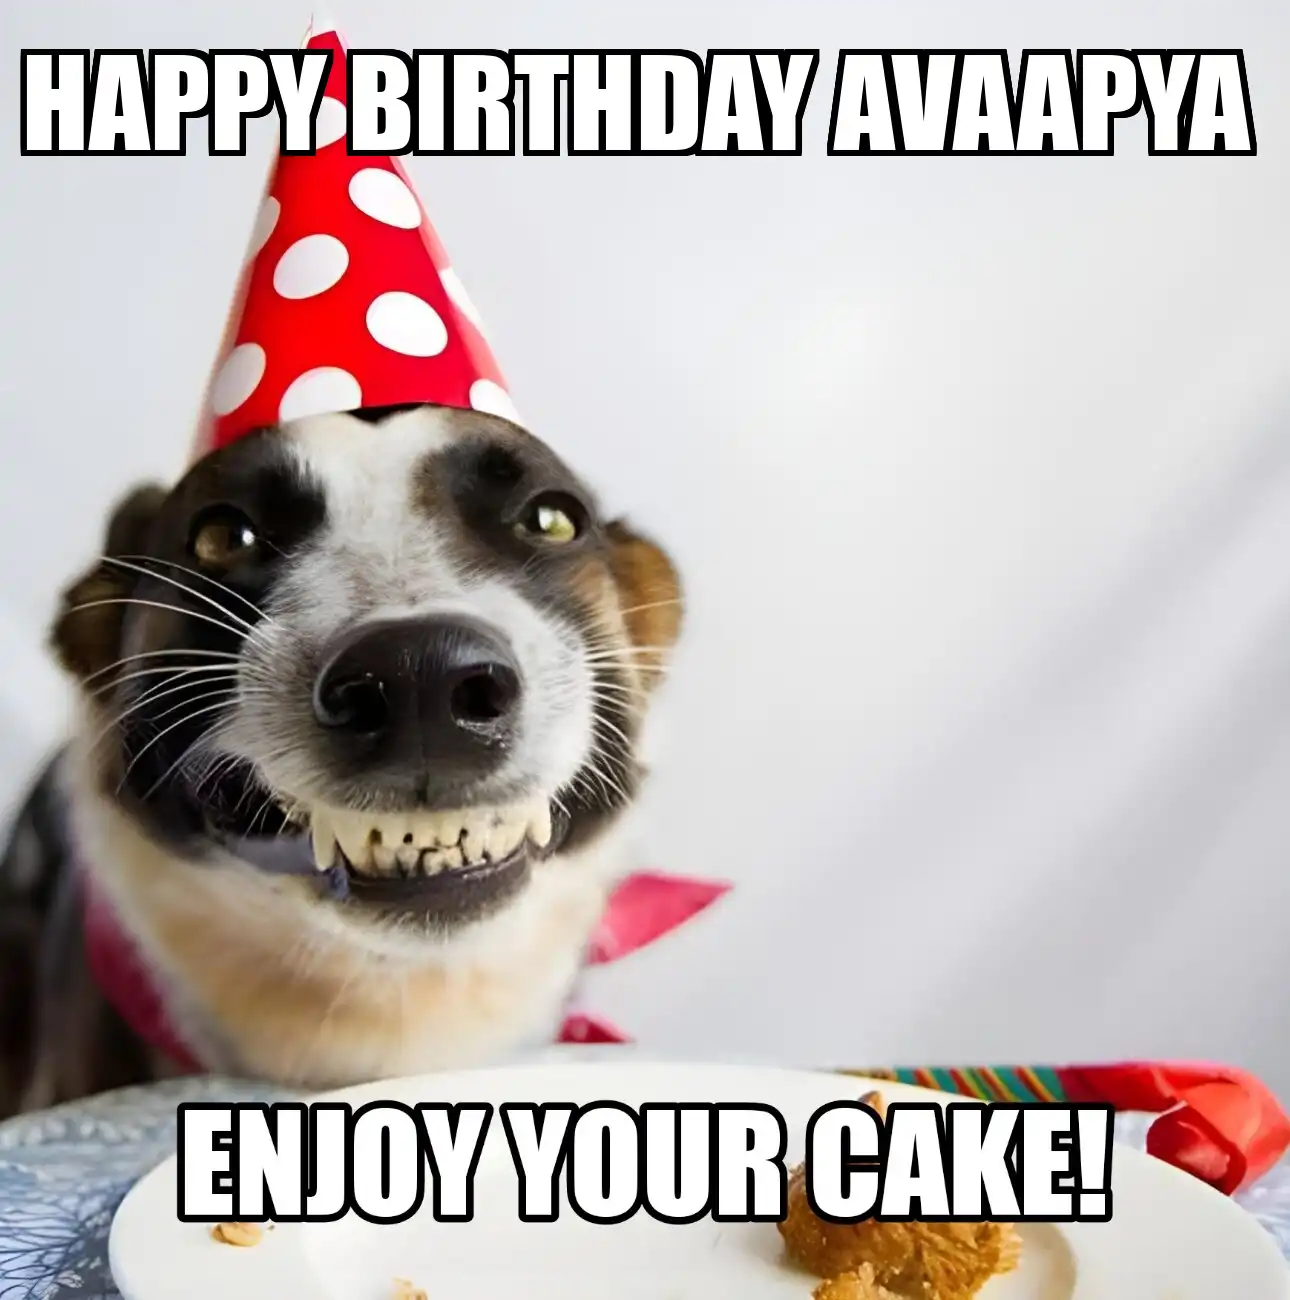 Happy Birthday Avaapya Enjoy Your Cake Dog Meme